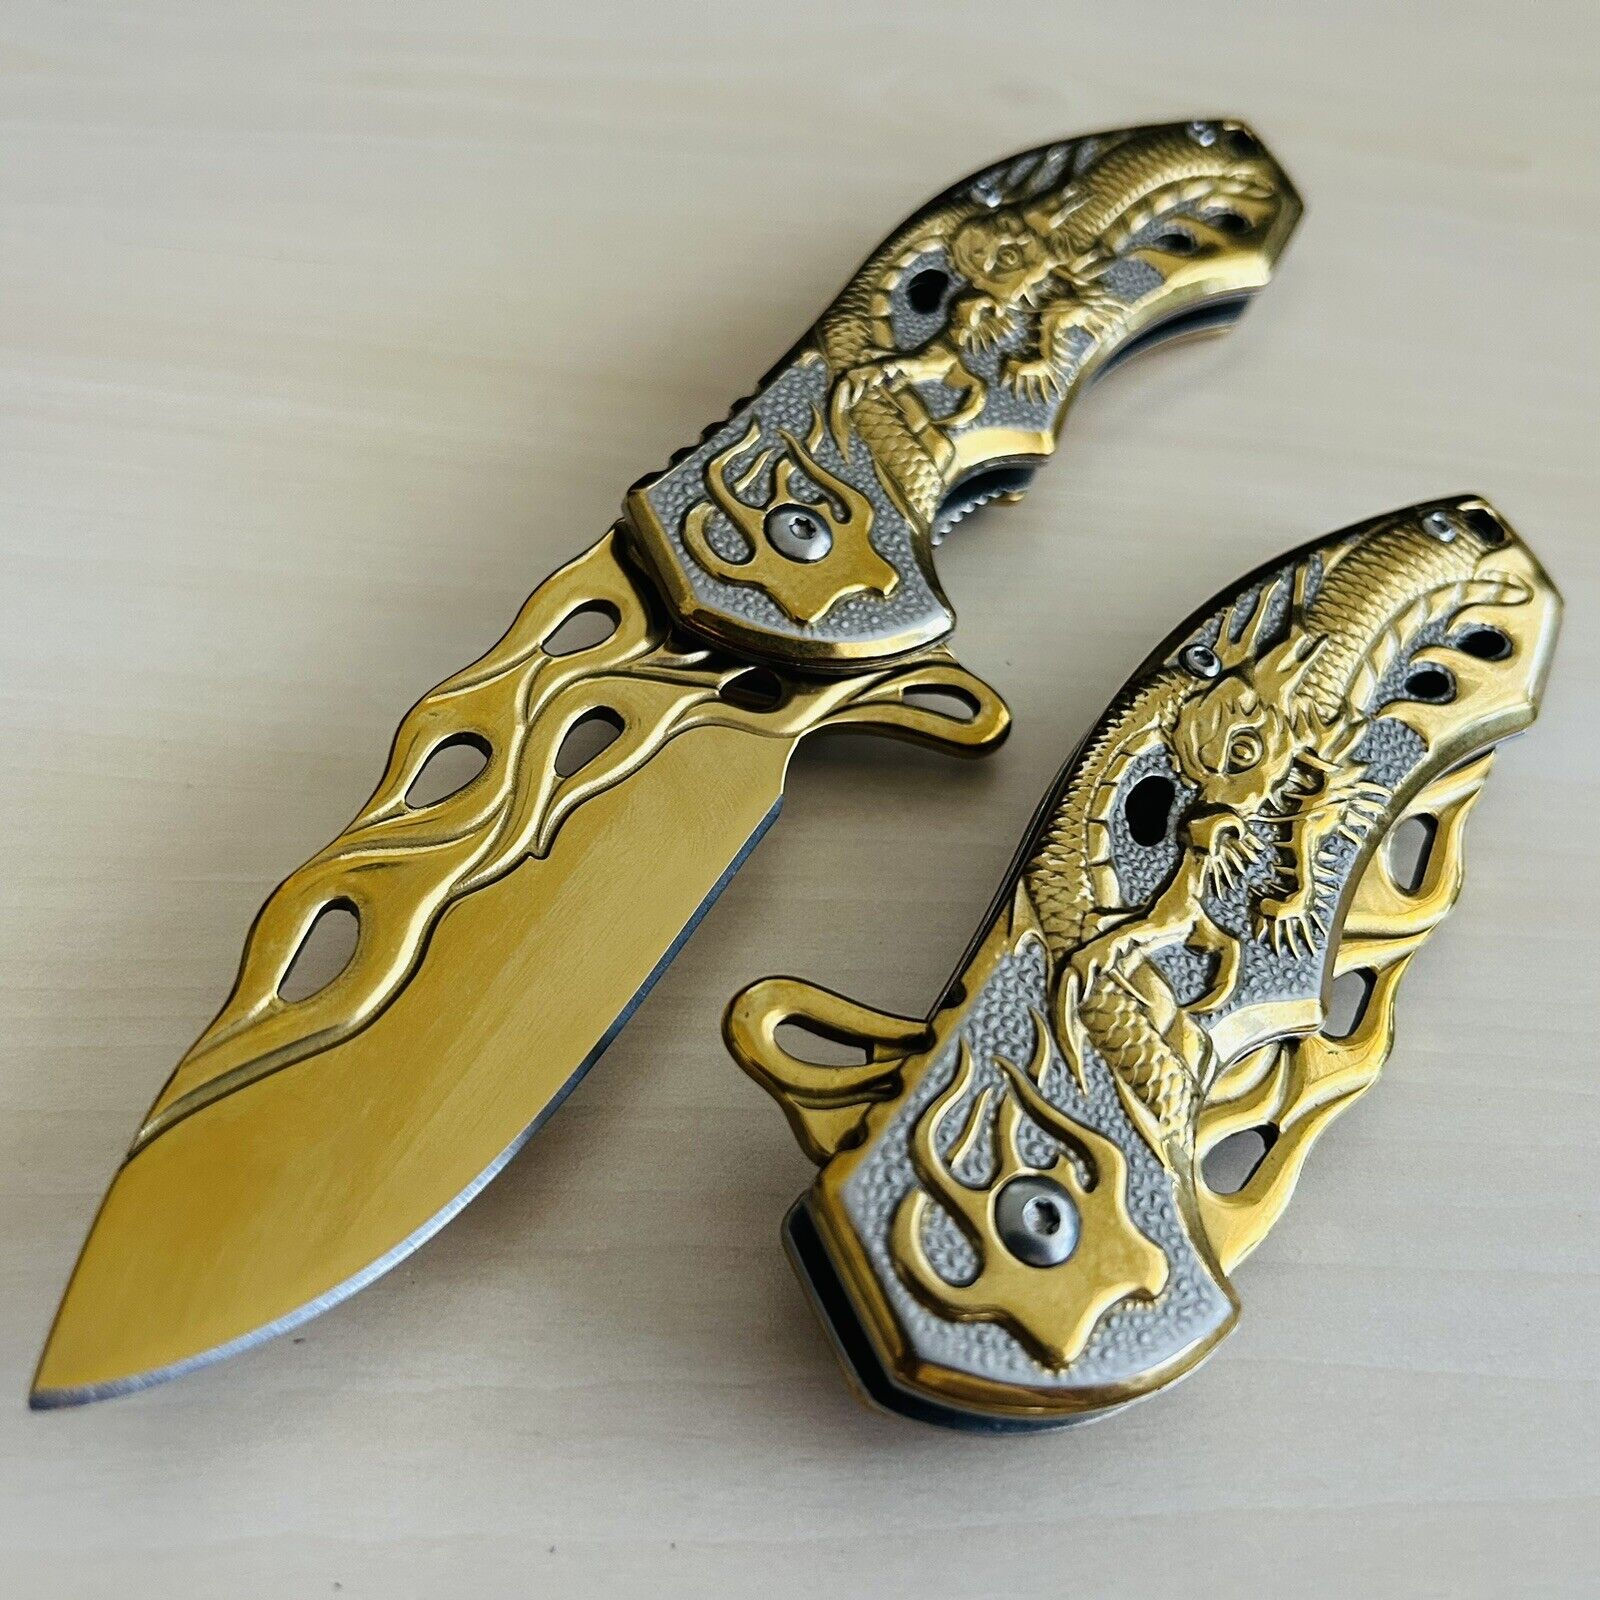 8” Gold Dragon Tactical Spring Assisted Open Folding Pocket Knife